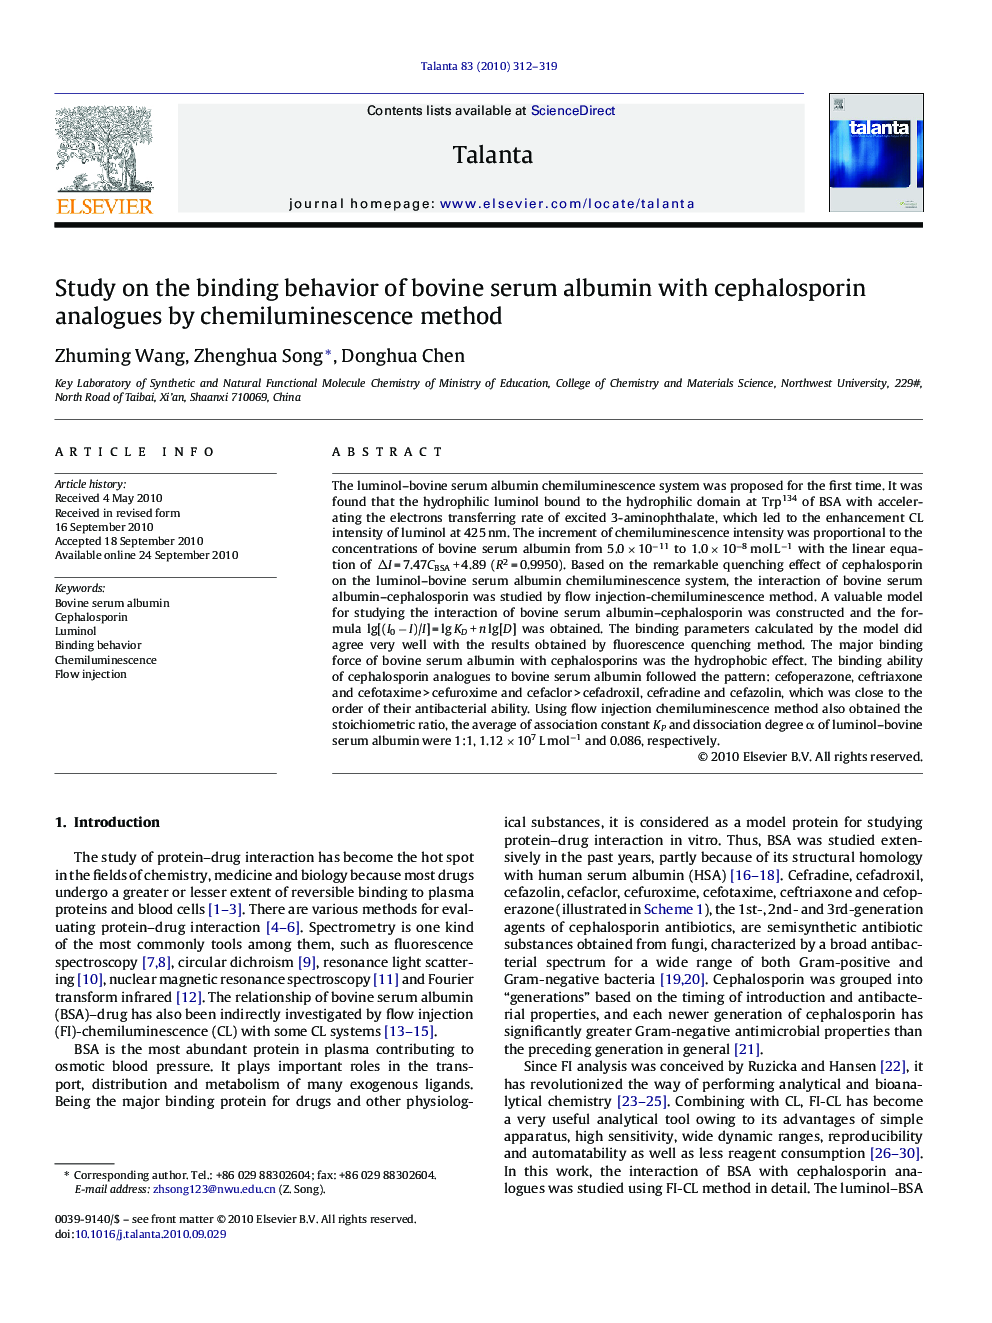 Study on the binding behavior of bovine serum albumin with cephalosporin analogues by chemiluminescence method